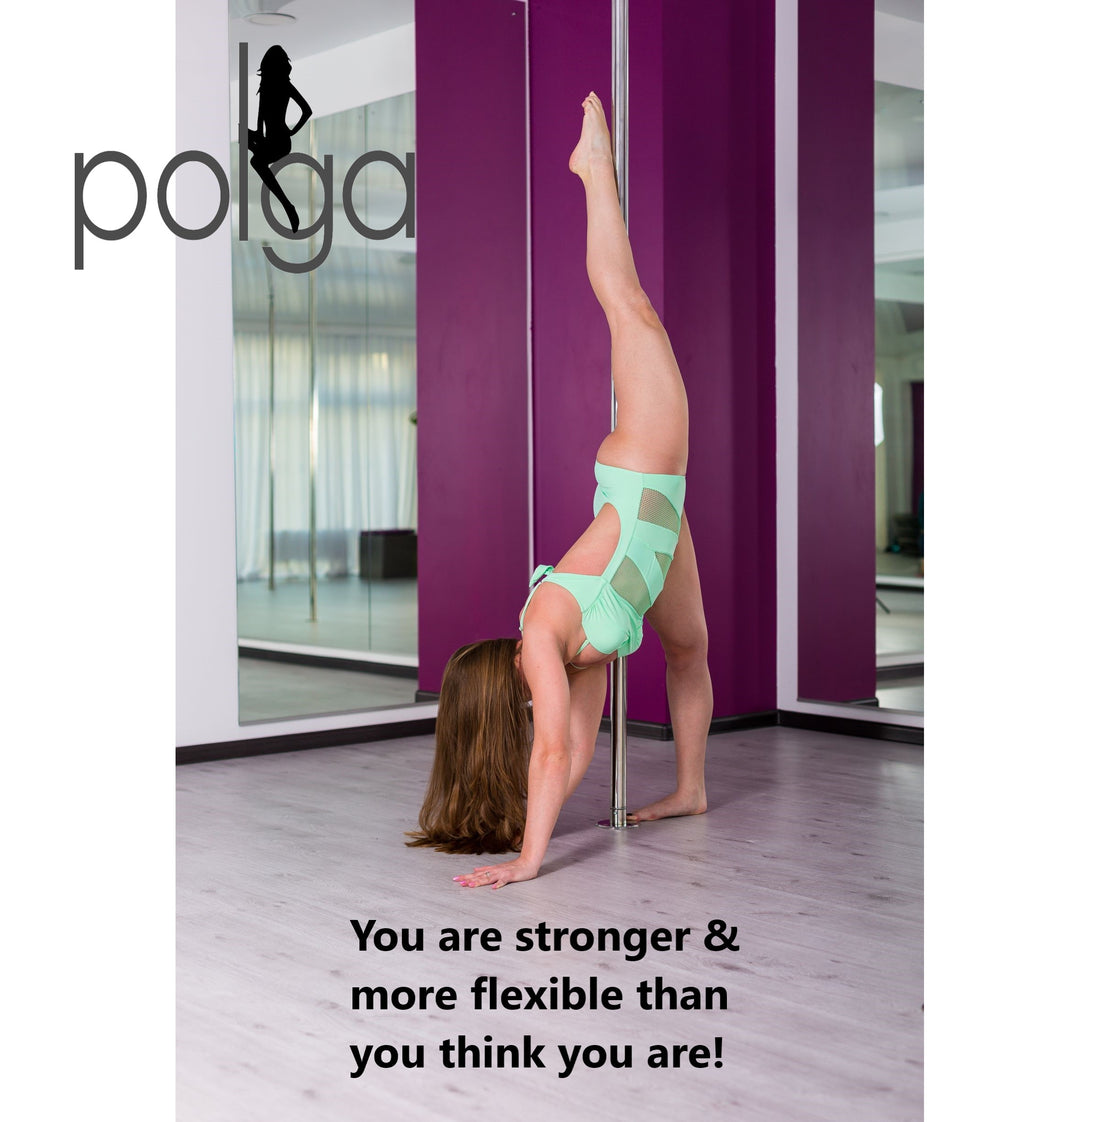 Polga “Pole into Spring” 90 Day Flexibly Fit Challenge!